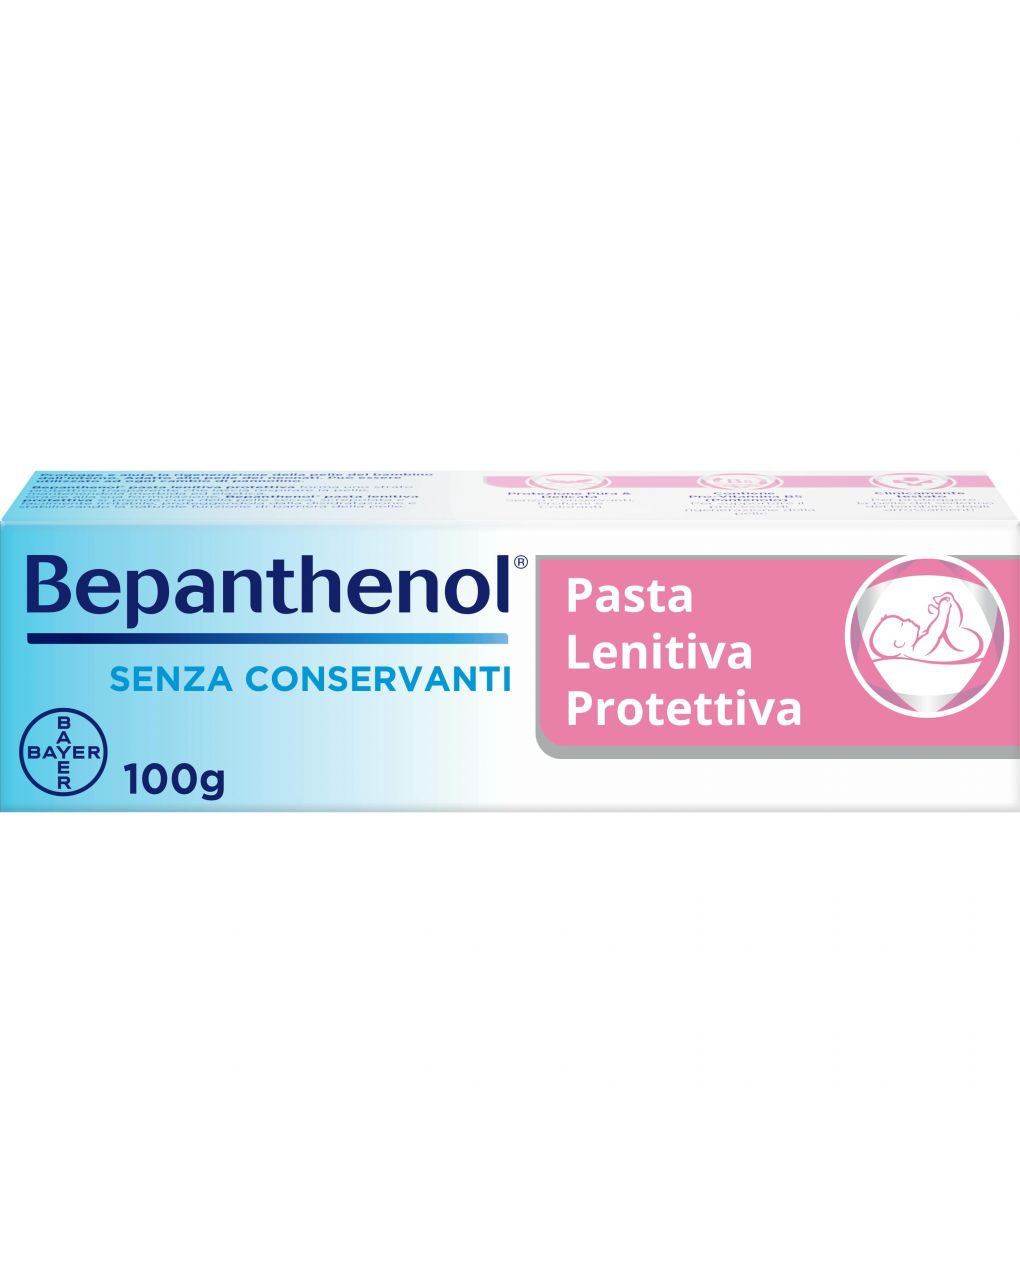 Bepanthenol pasta lenitiva protettiva - crema cambio pannolino anti arrossamento neonato - 100 g - Bepanthenol